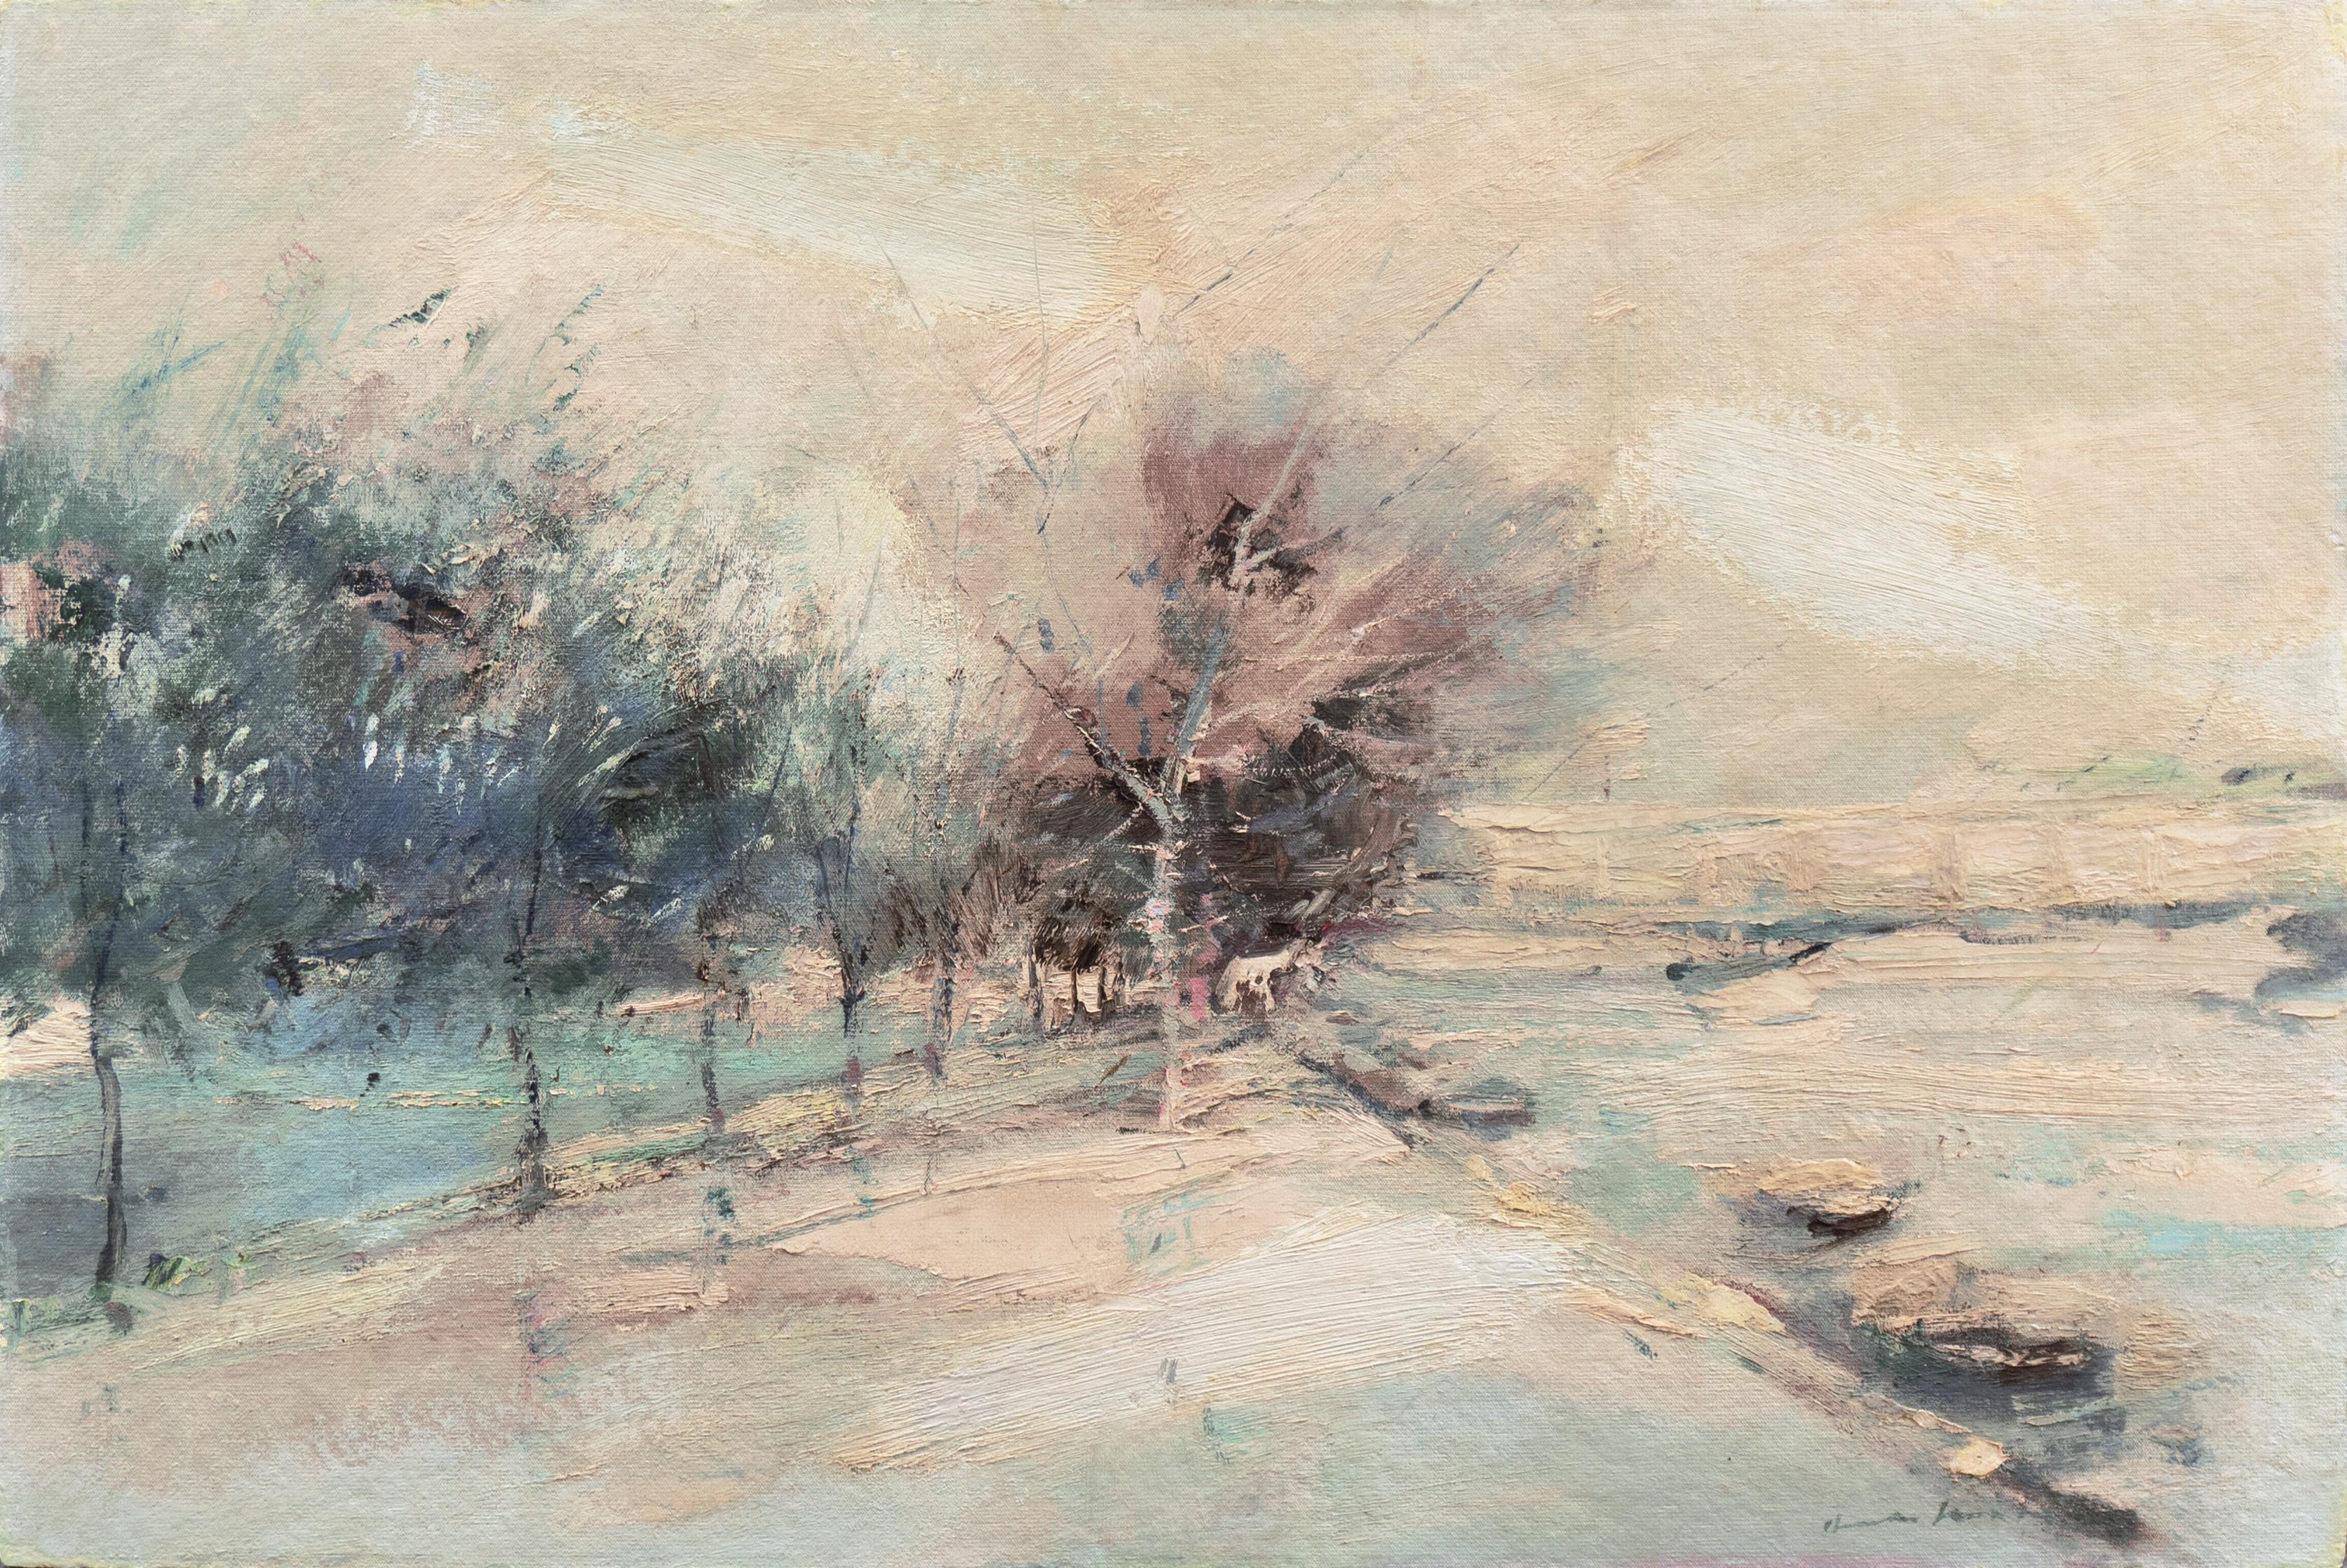 Charles Gordon Harris Landscape Painting - 'The Seine in Winter', School of Paris, Tonalist, Snowy French Landscape, Mood